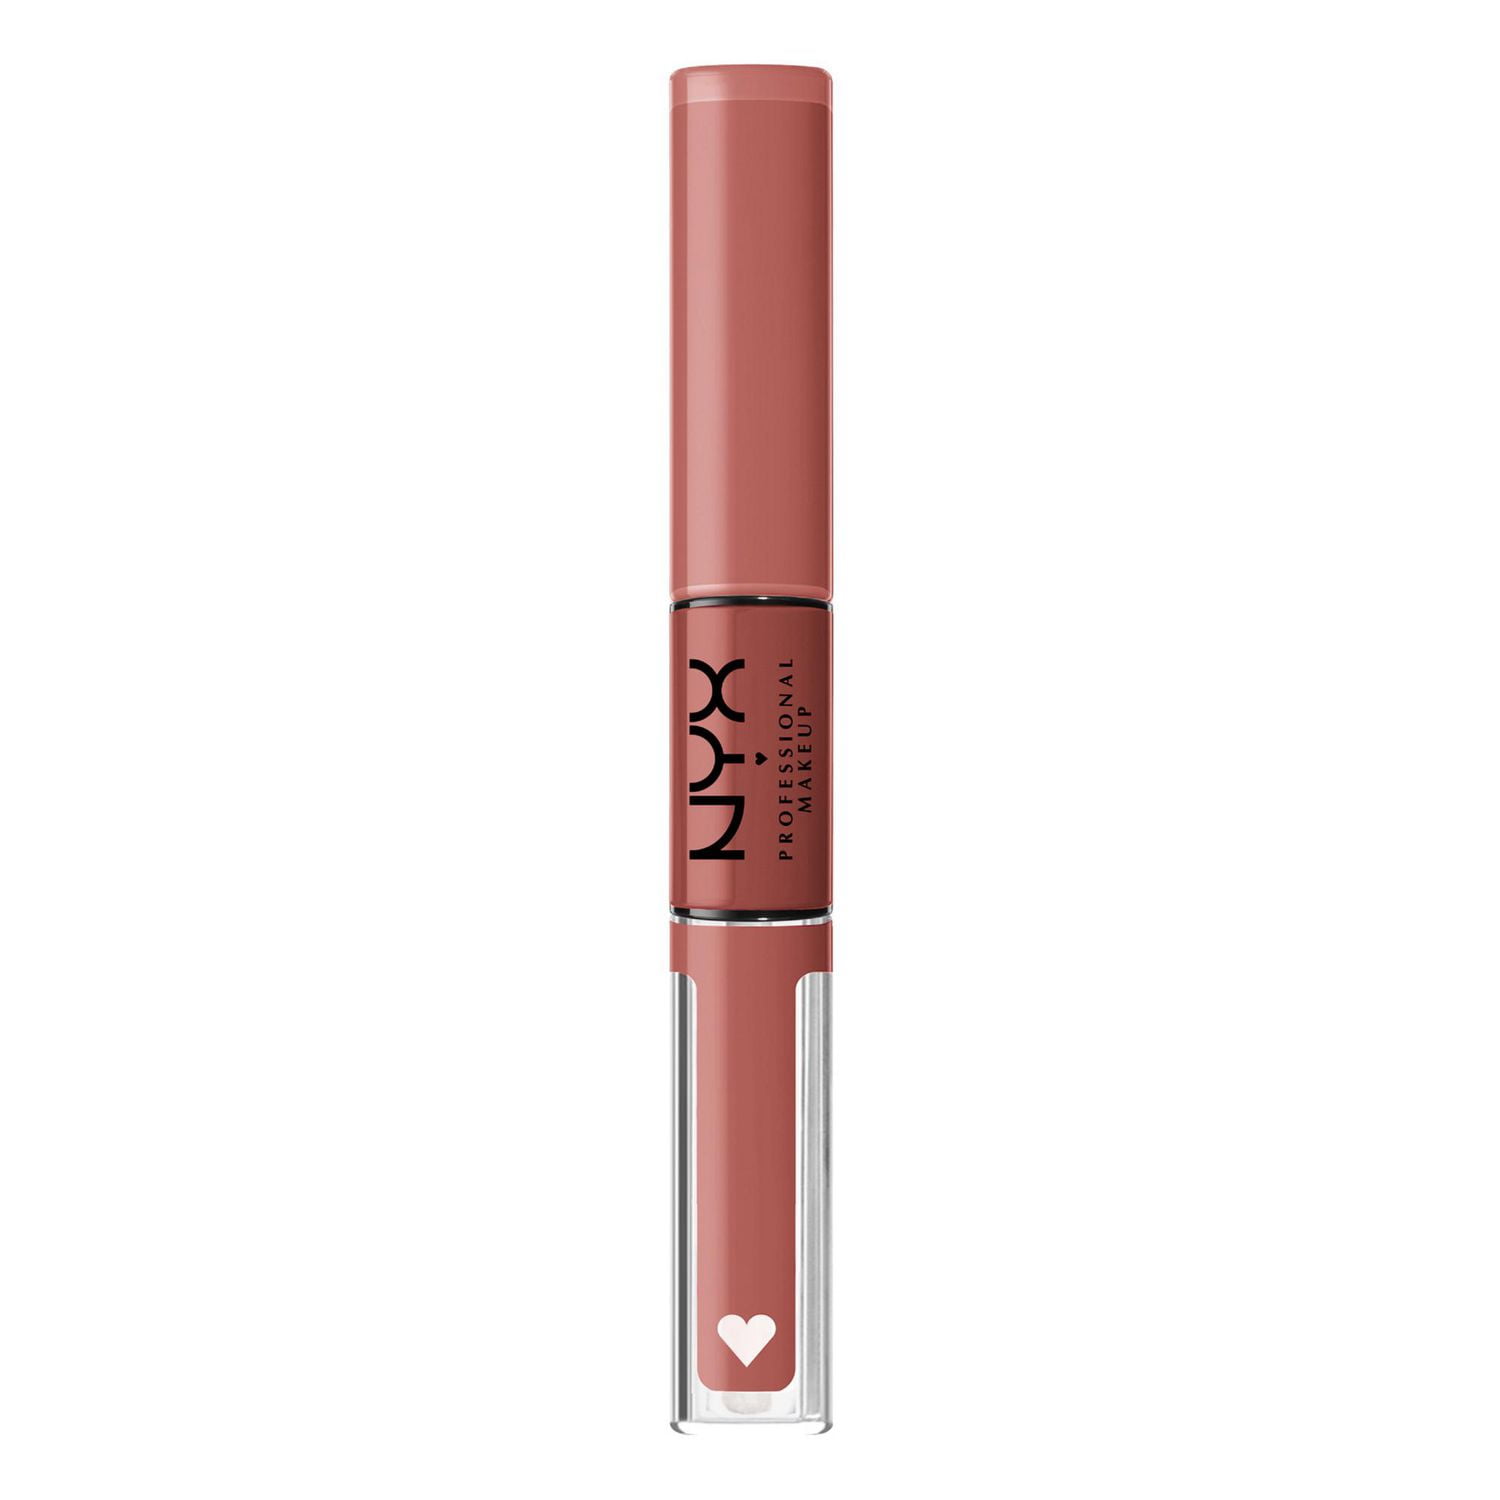 NYX PROFESSIONAL MAKEUP, Shine Loud, High shine lip colour, 16HR wear,  Vegan Formula - BORN TO HUSTLE (Muted Rose), 16h loud shine lip colour 